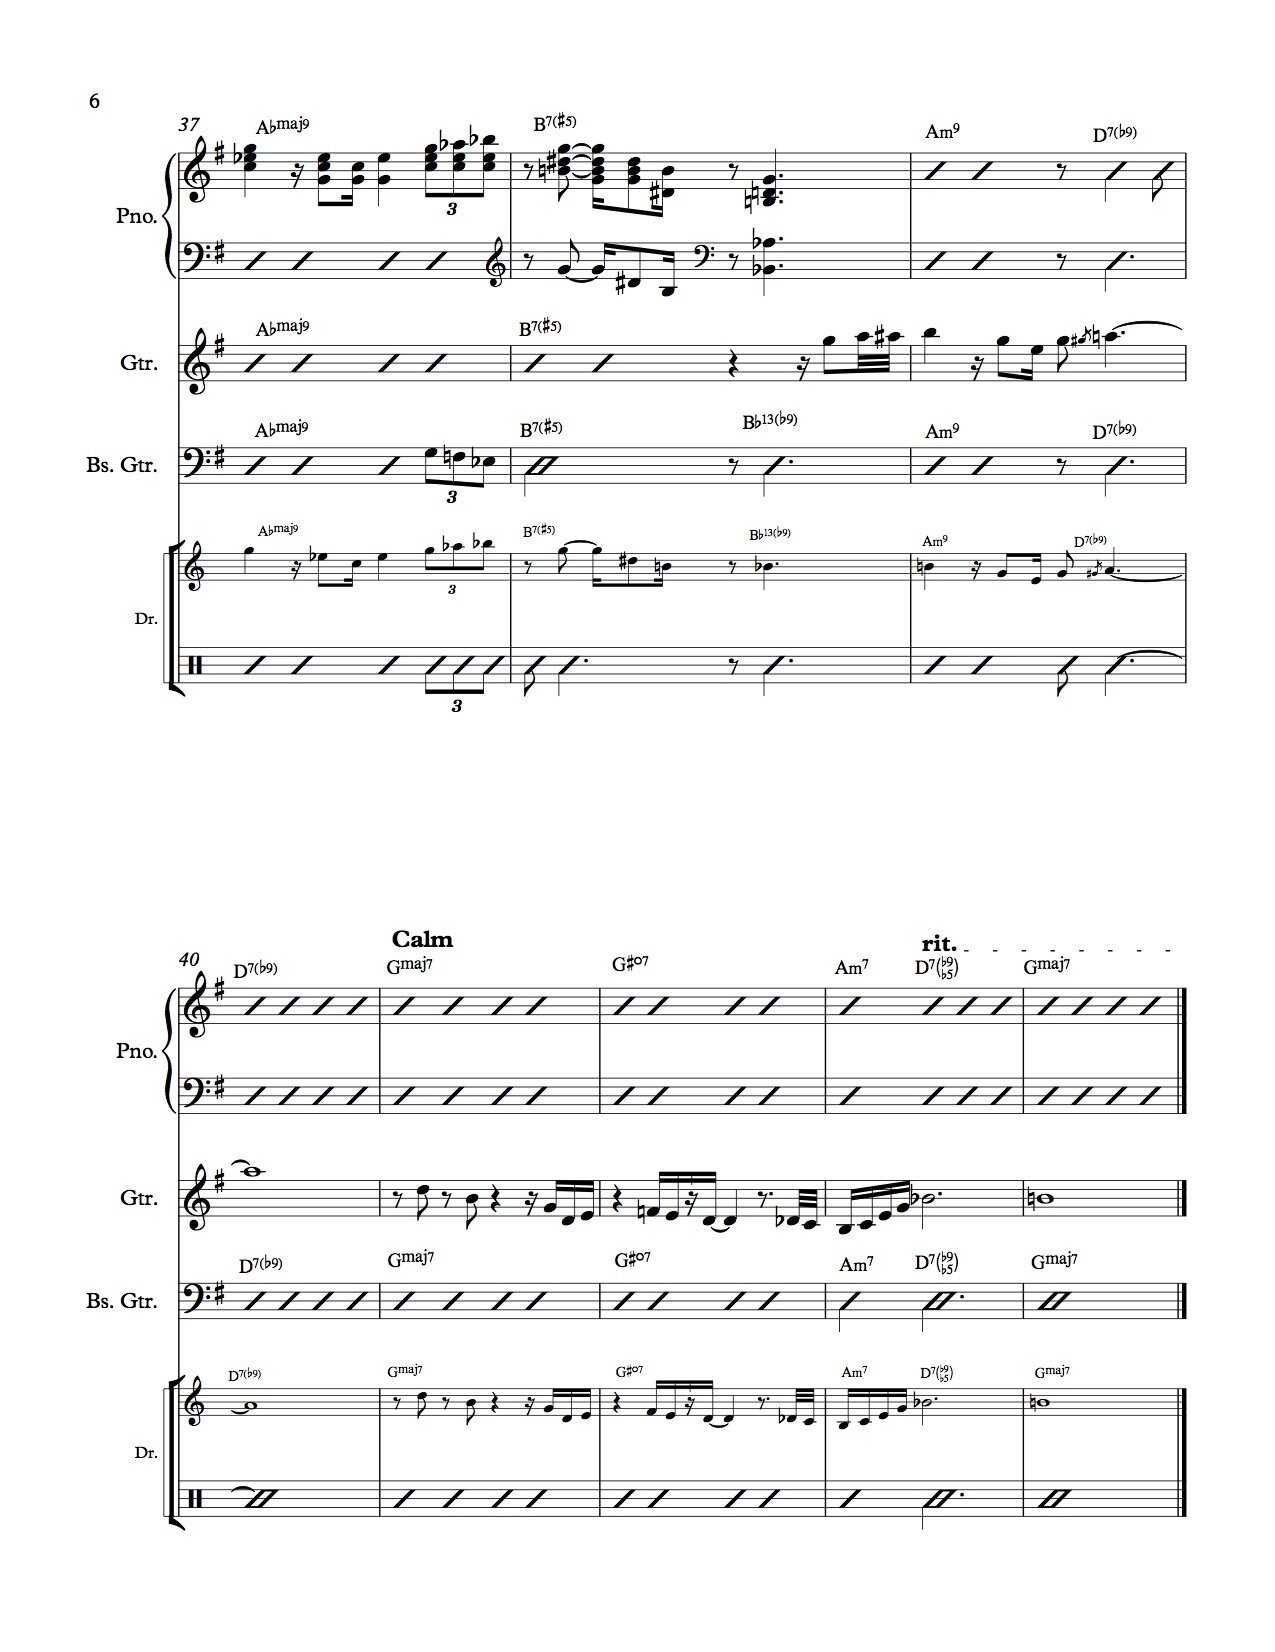 Themes Song(chord symbols) - Full Score1.jpg